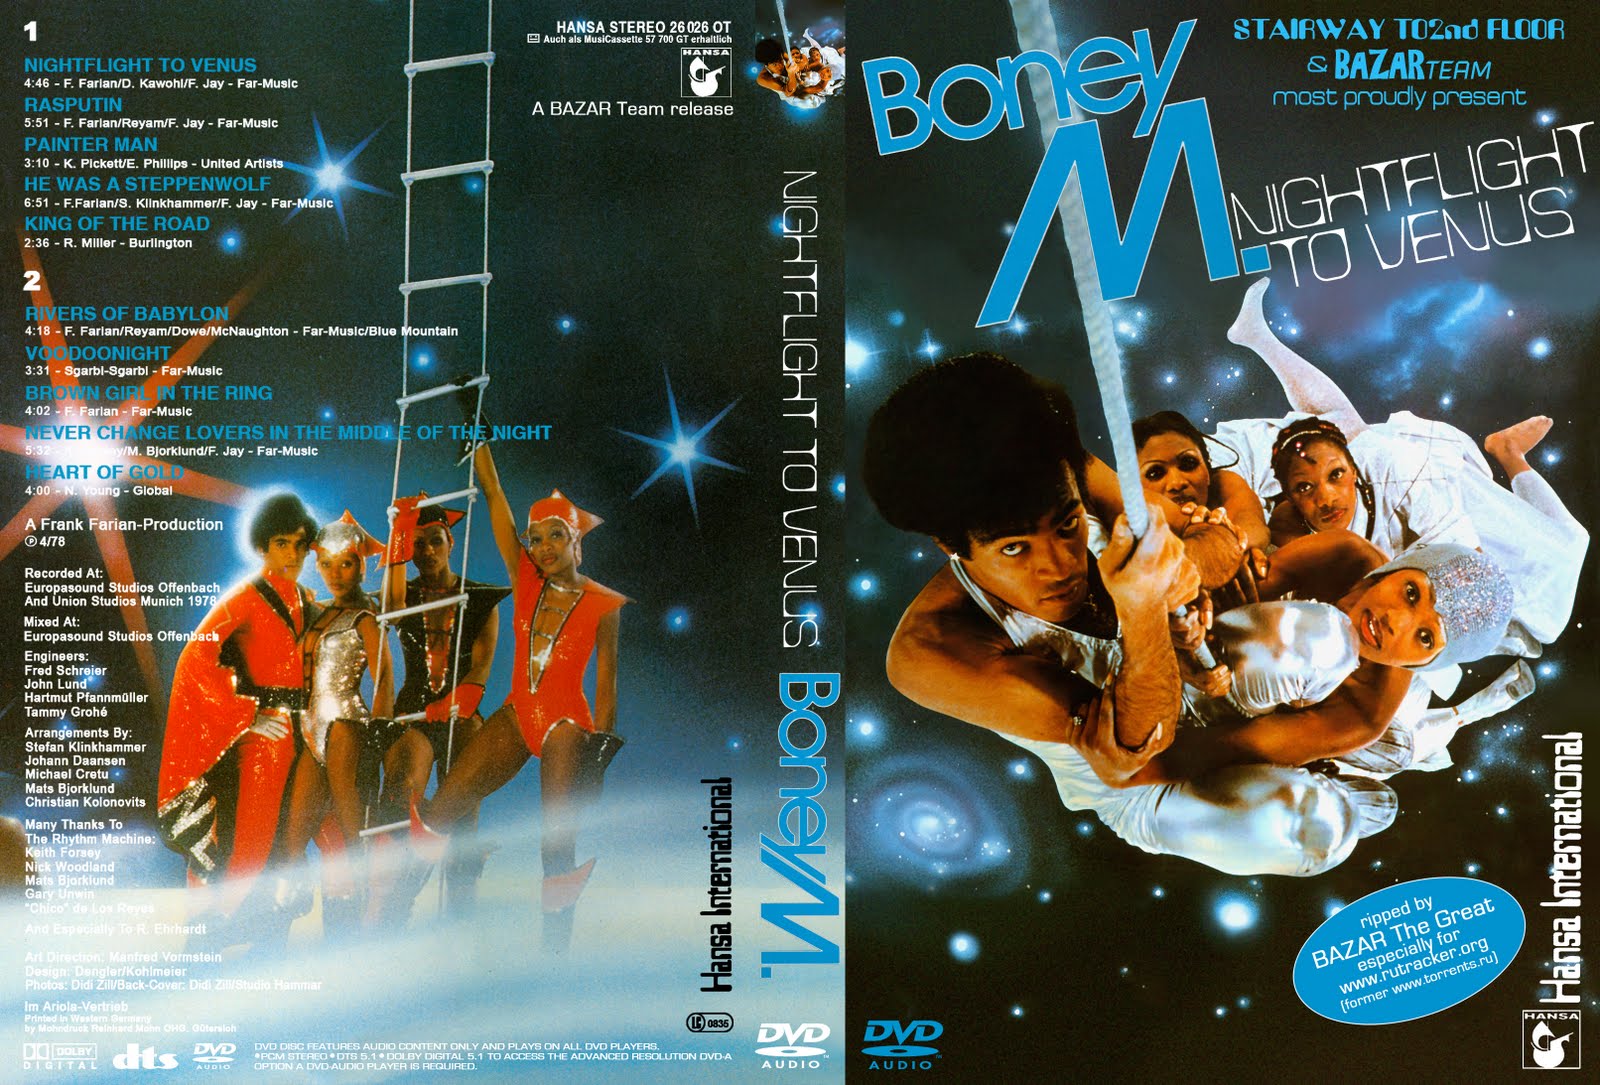 Boney m nightflight. Boney m Venus Nightflight. 1978 - Nightflight to Venus. Boney m – Nightflight to Venus. Бони м полет на Венеру.